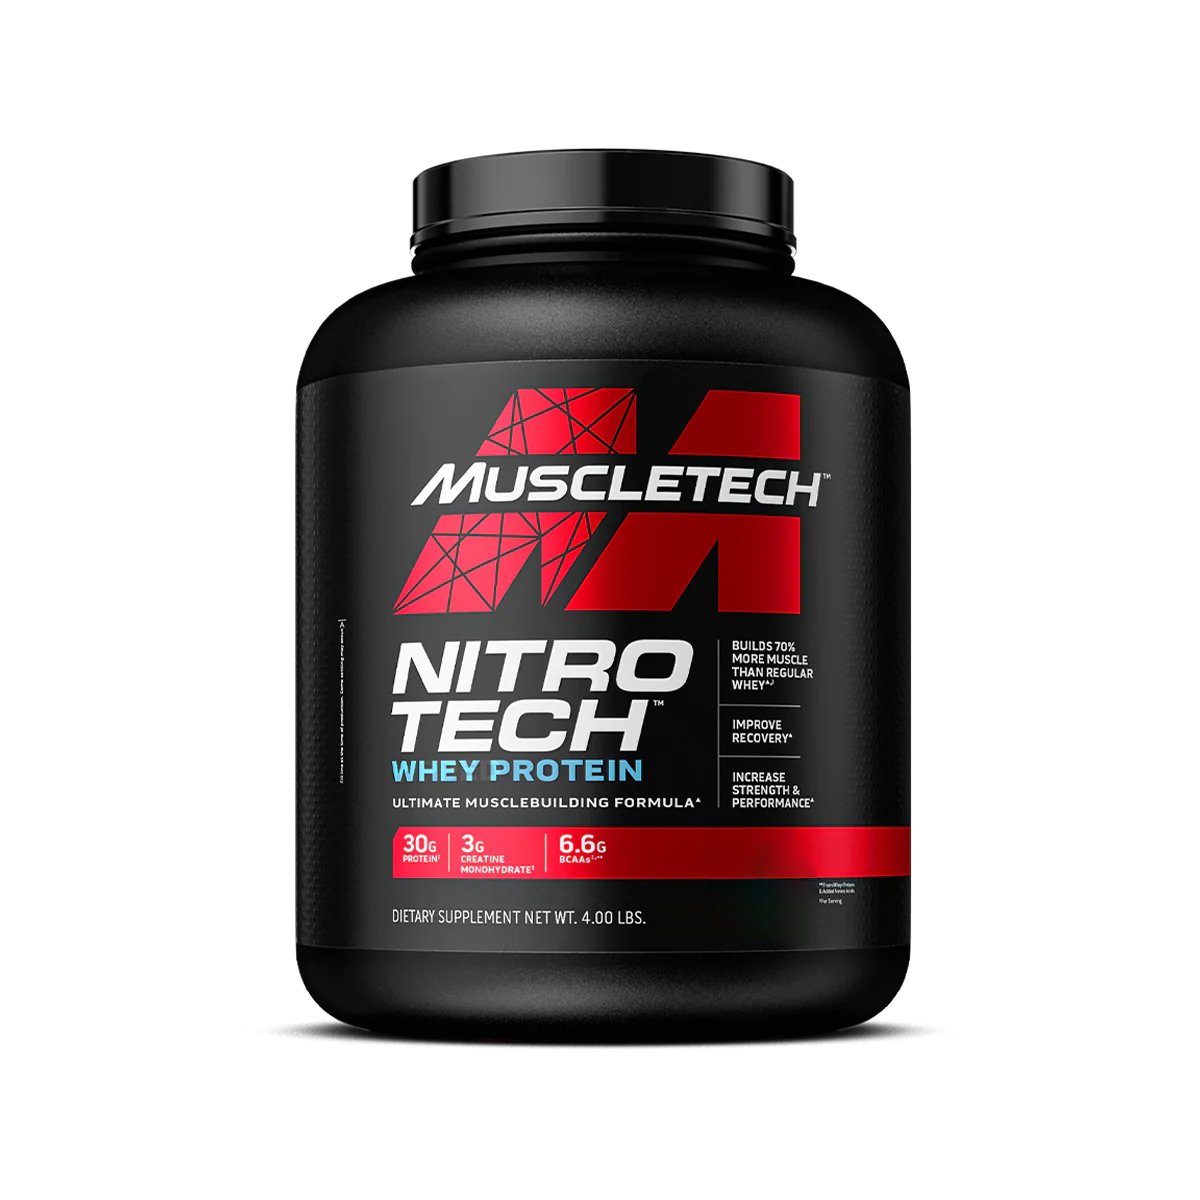 Протеин Muscletech Nitro Tech Whey Protein, 1.81 кг Ваниль,  ml, MuscleTech. Proteína. Mass Gain recuperación Anti-catabolic properties 